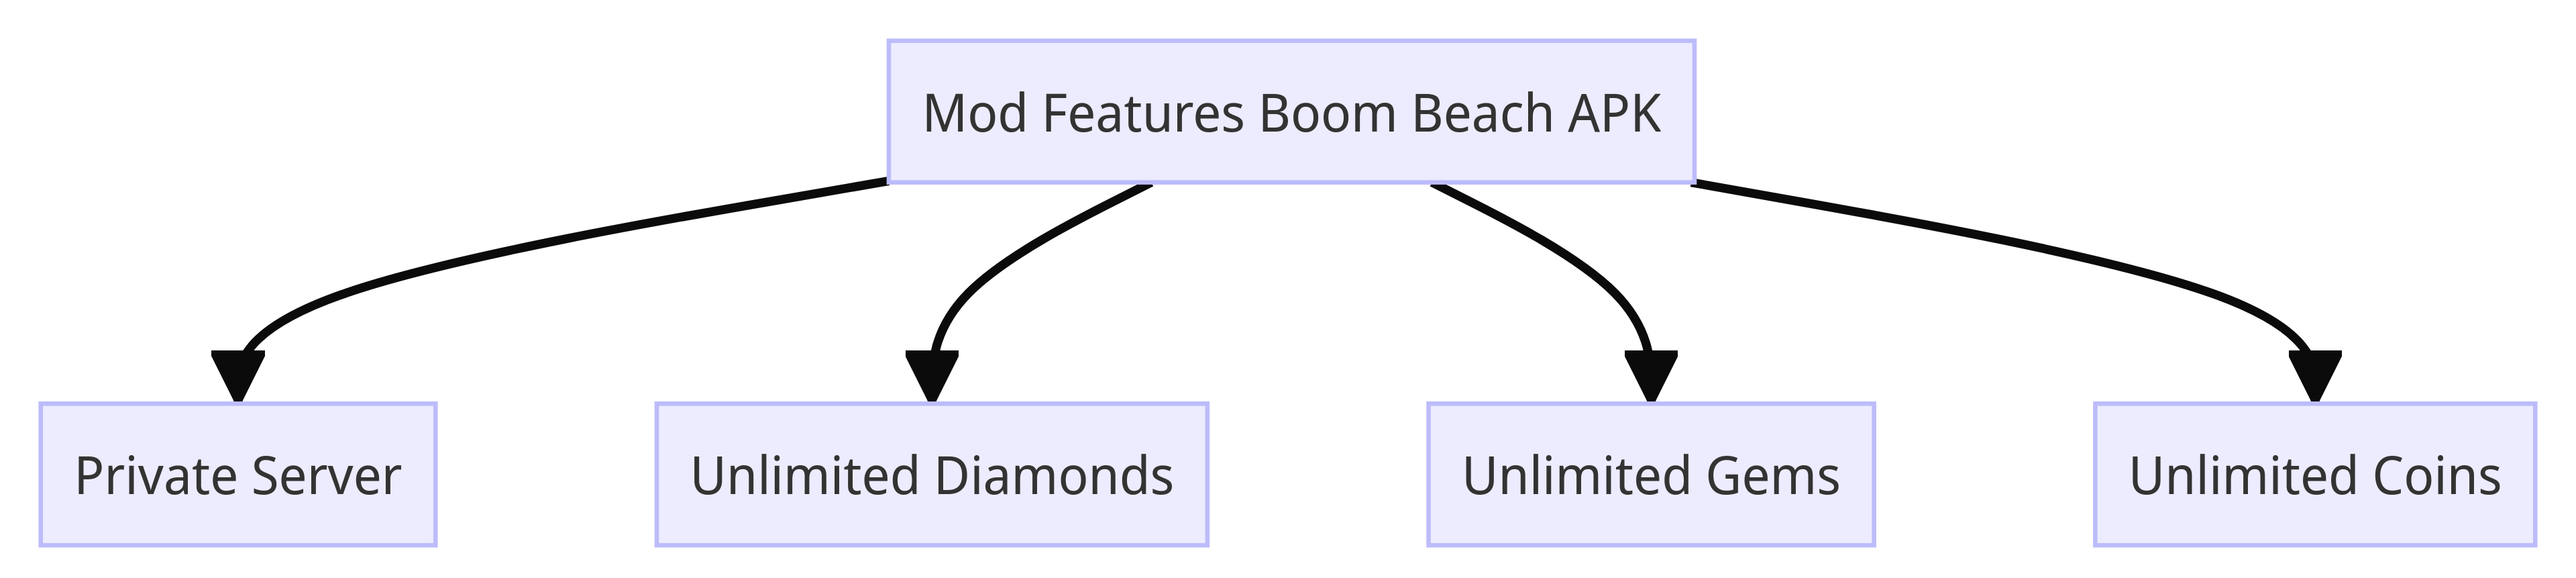 Mod Features Boom Beach APK